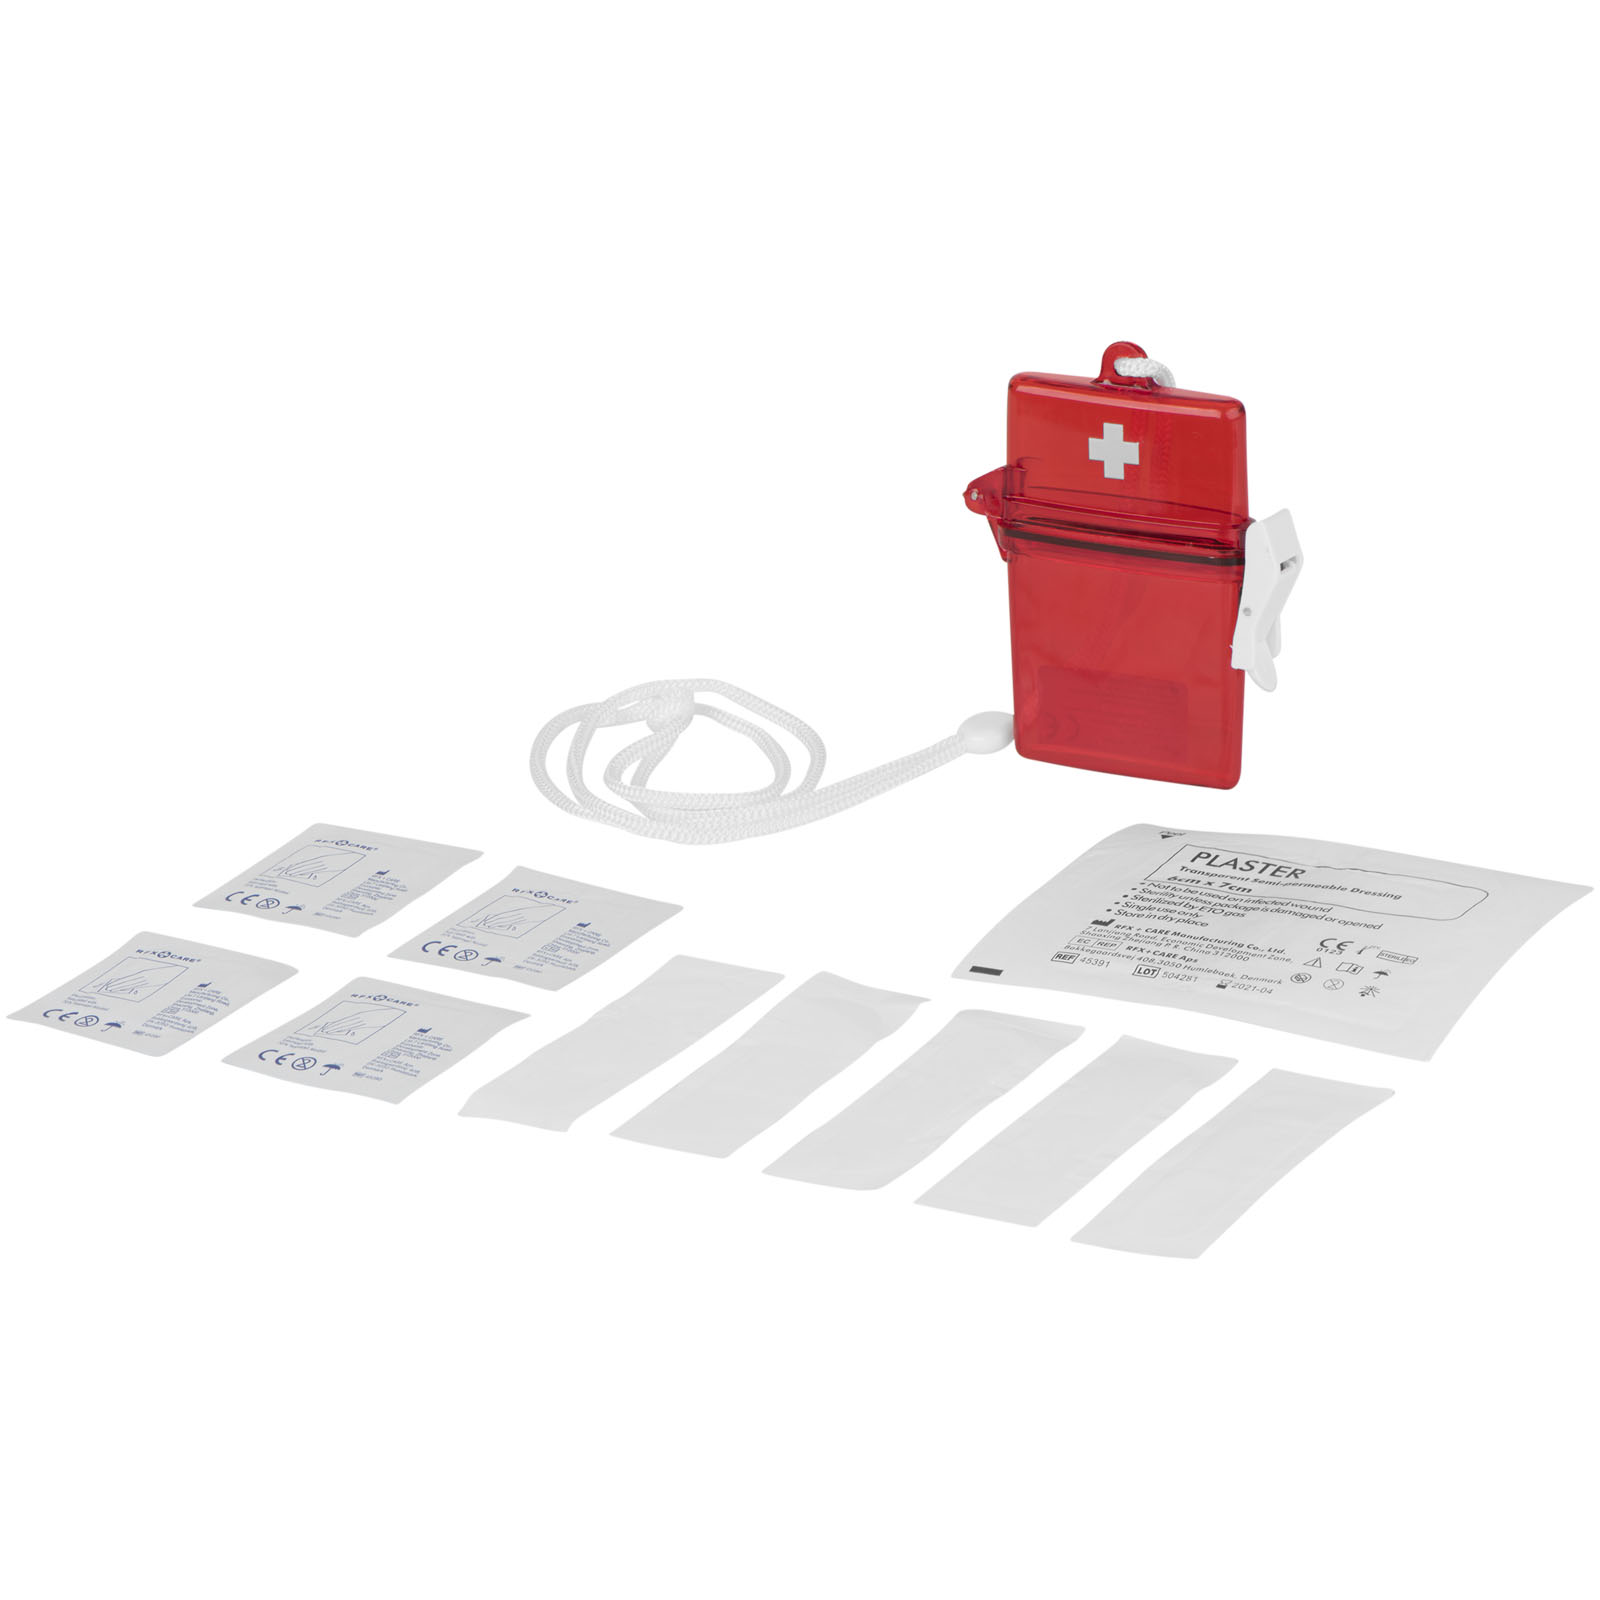 Kit de Primeros Auxilios en Caja Roja Transparente - Salas Altas